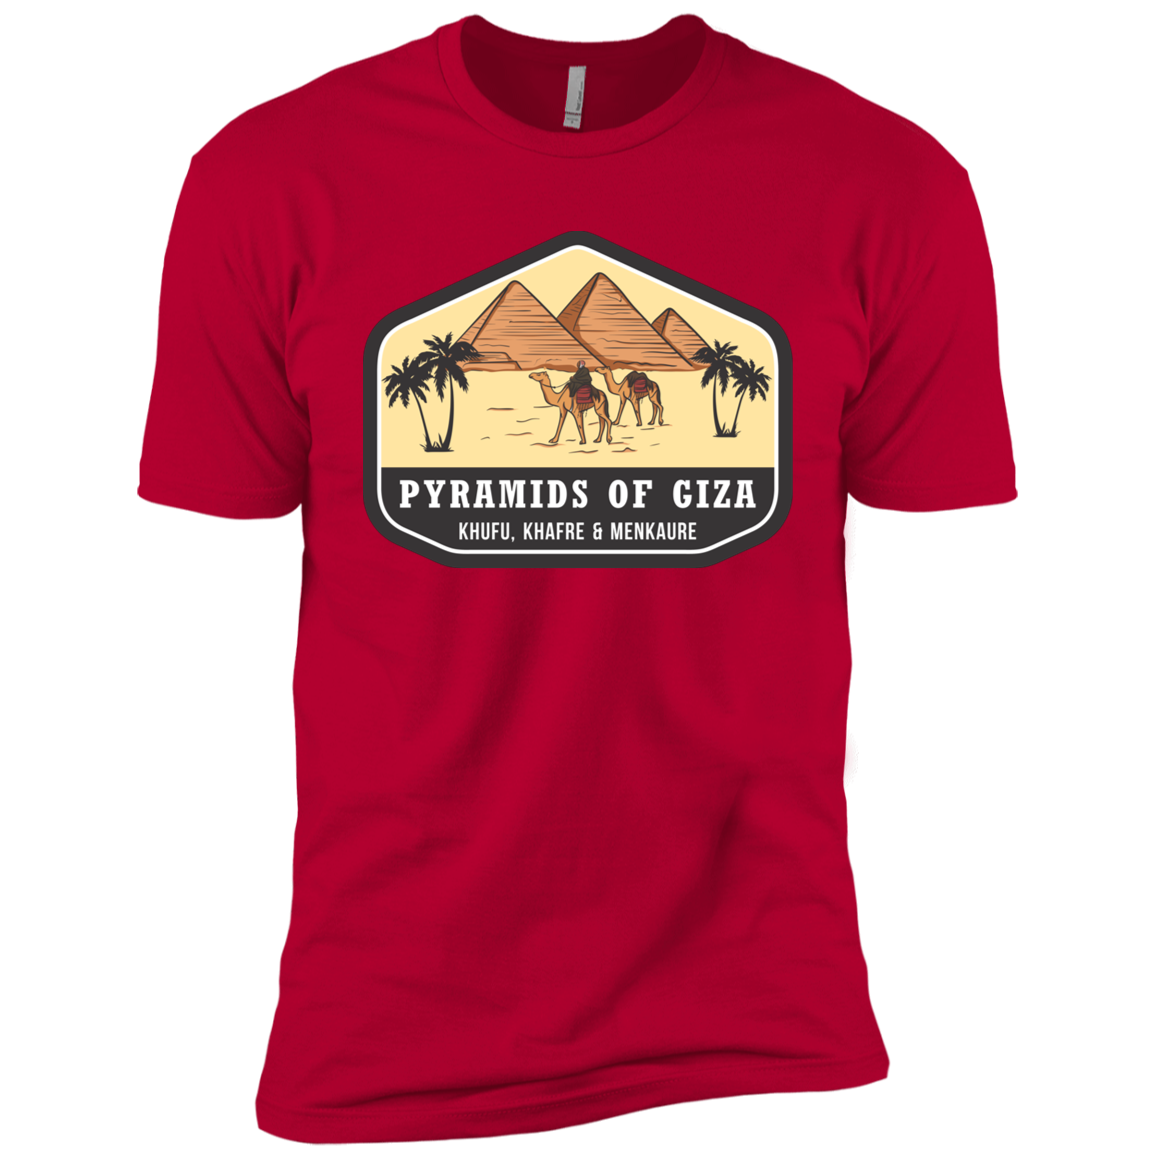 The Pyramids of Giza Kids' Classic T-Shirt